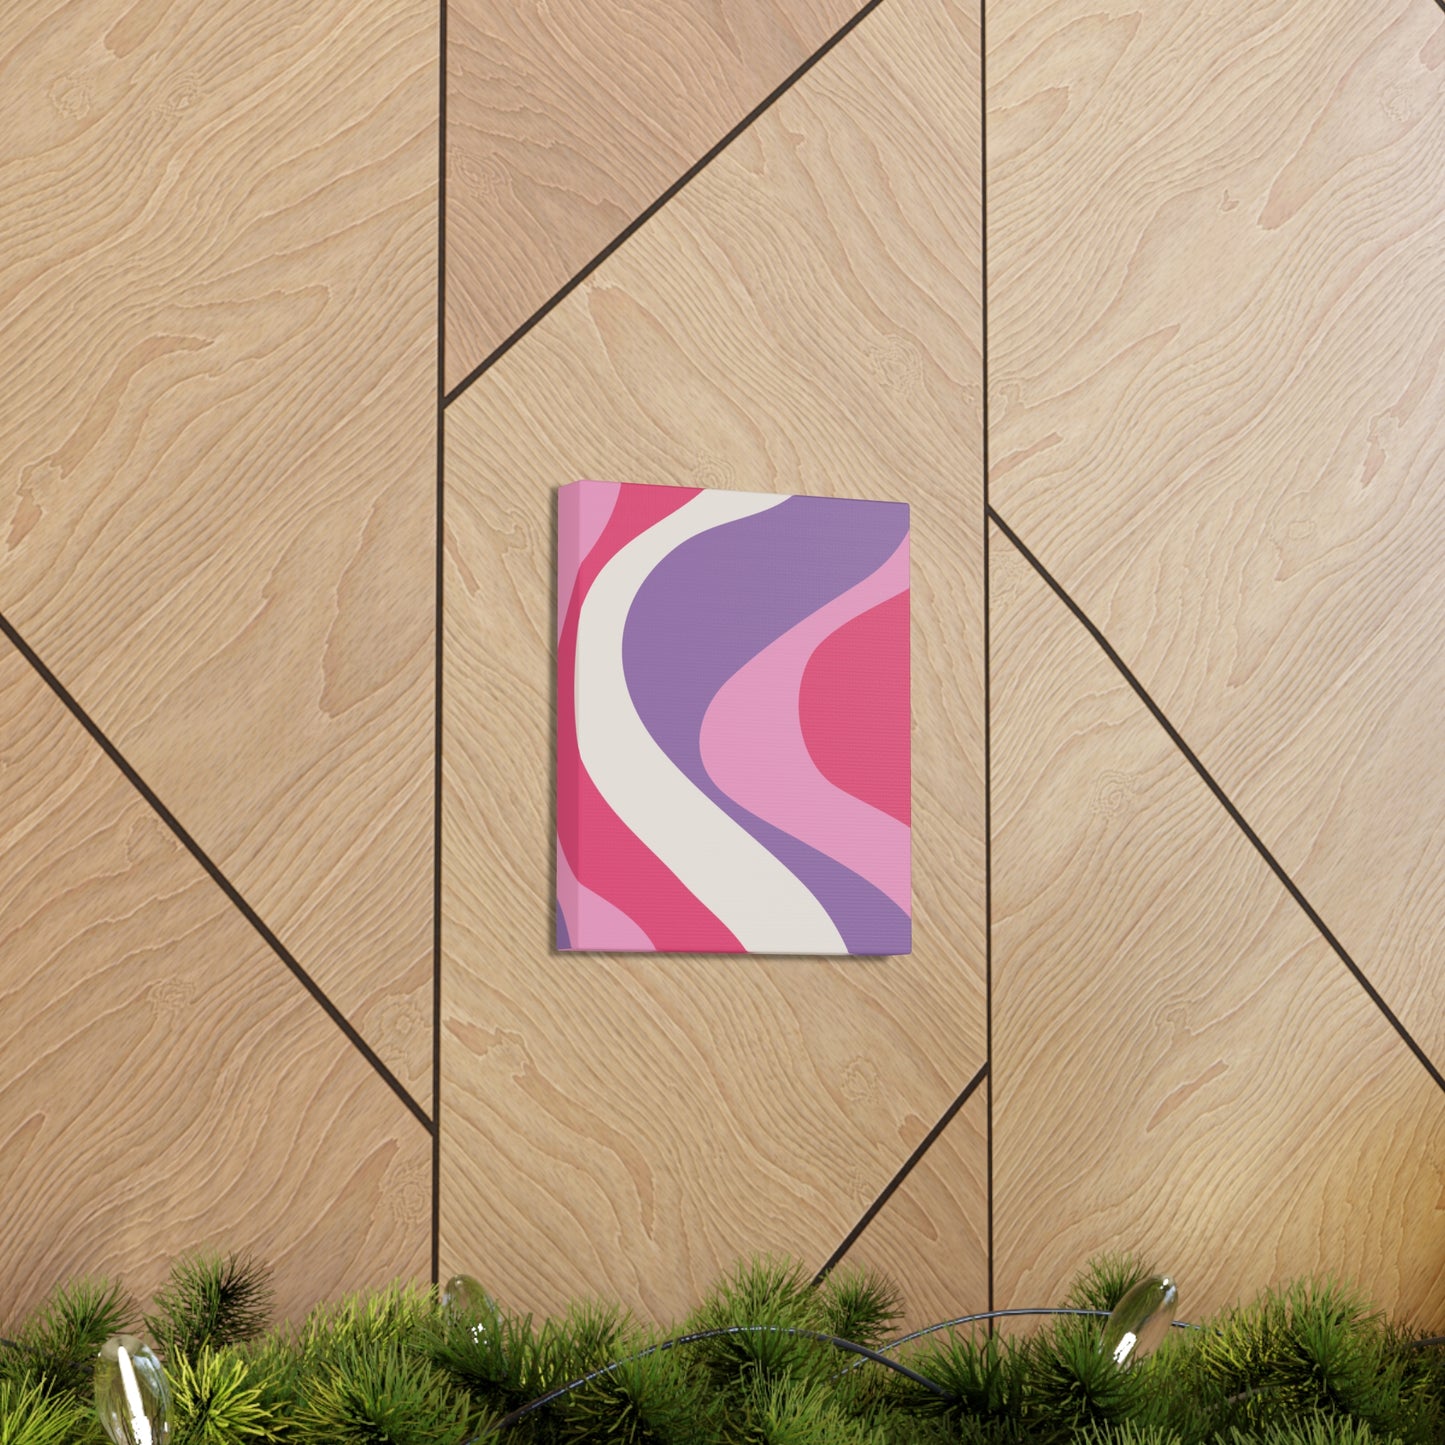 Retro 60's Groovy Hippie Swirl MCM Pink and Purple Canvas Gallery Wrap